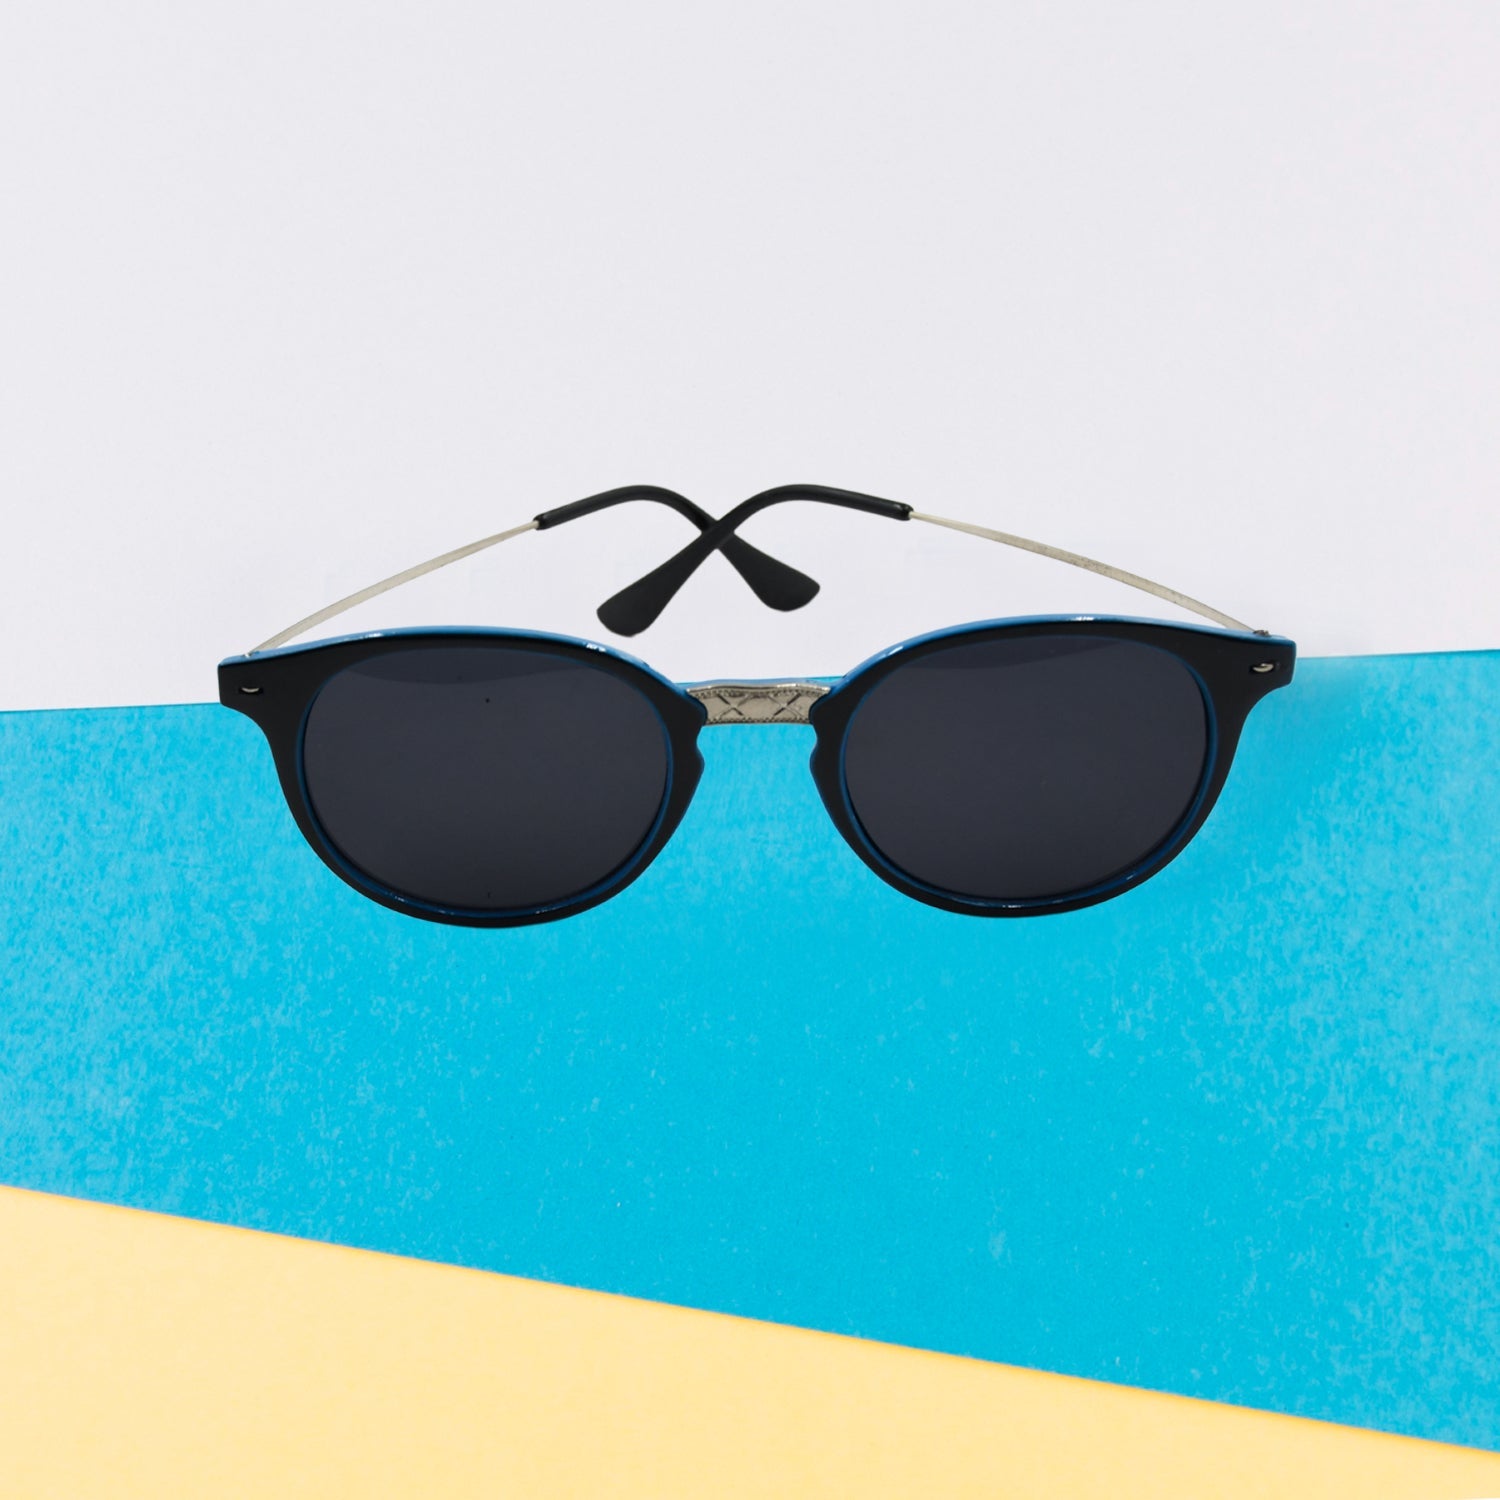 7756 UV Protected Round Sunglasses, classic Sunglasses for Men & Women, Lightweight